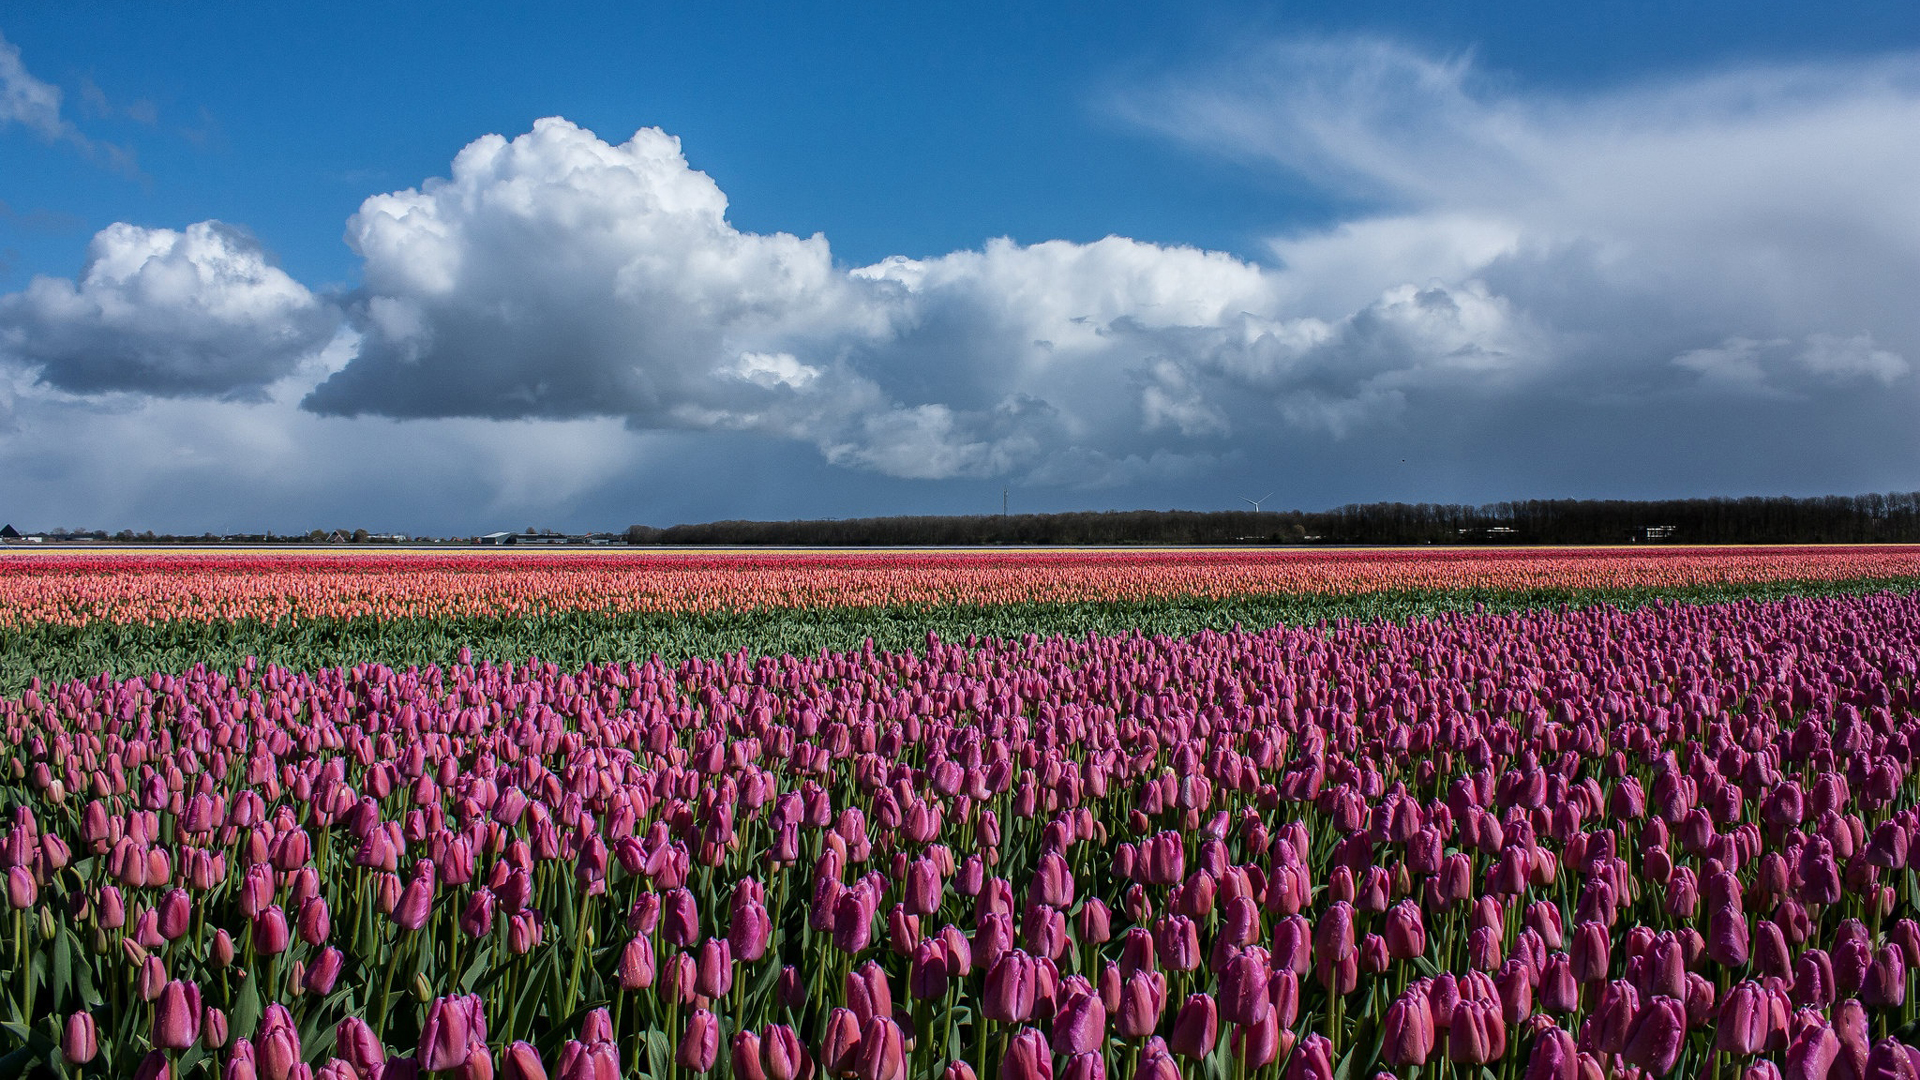 Pink Tulip Flowers Field Garden Under White Clouds Blue Sky During Daytime 2K Flowers